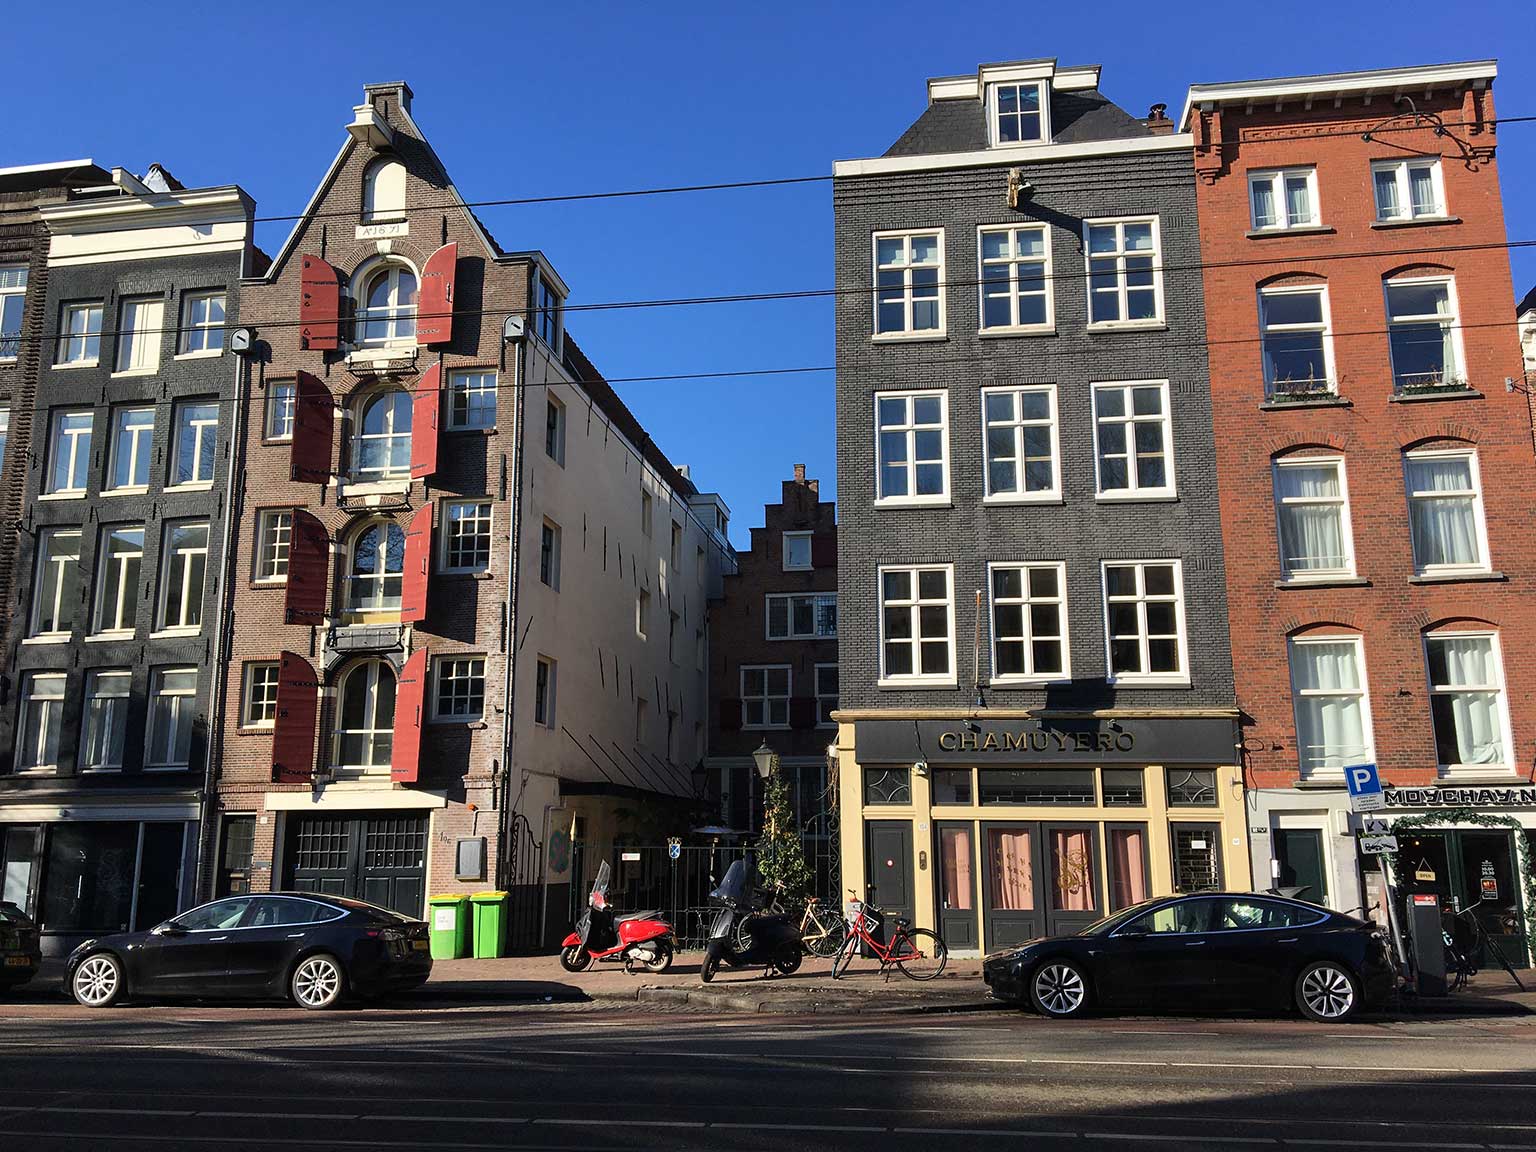 Huis en binnenplaats op Rozengracht 106, Amsterdam, vroeger de Bols Taveerne